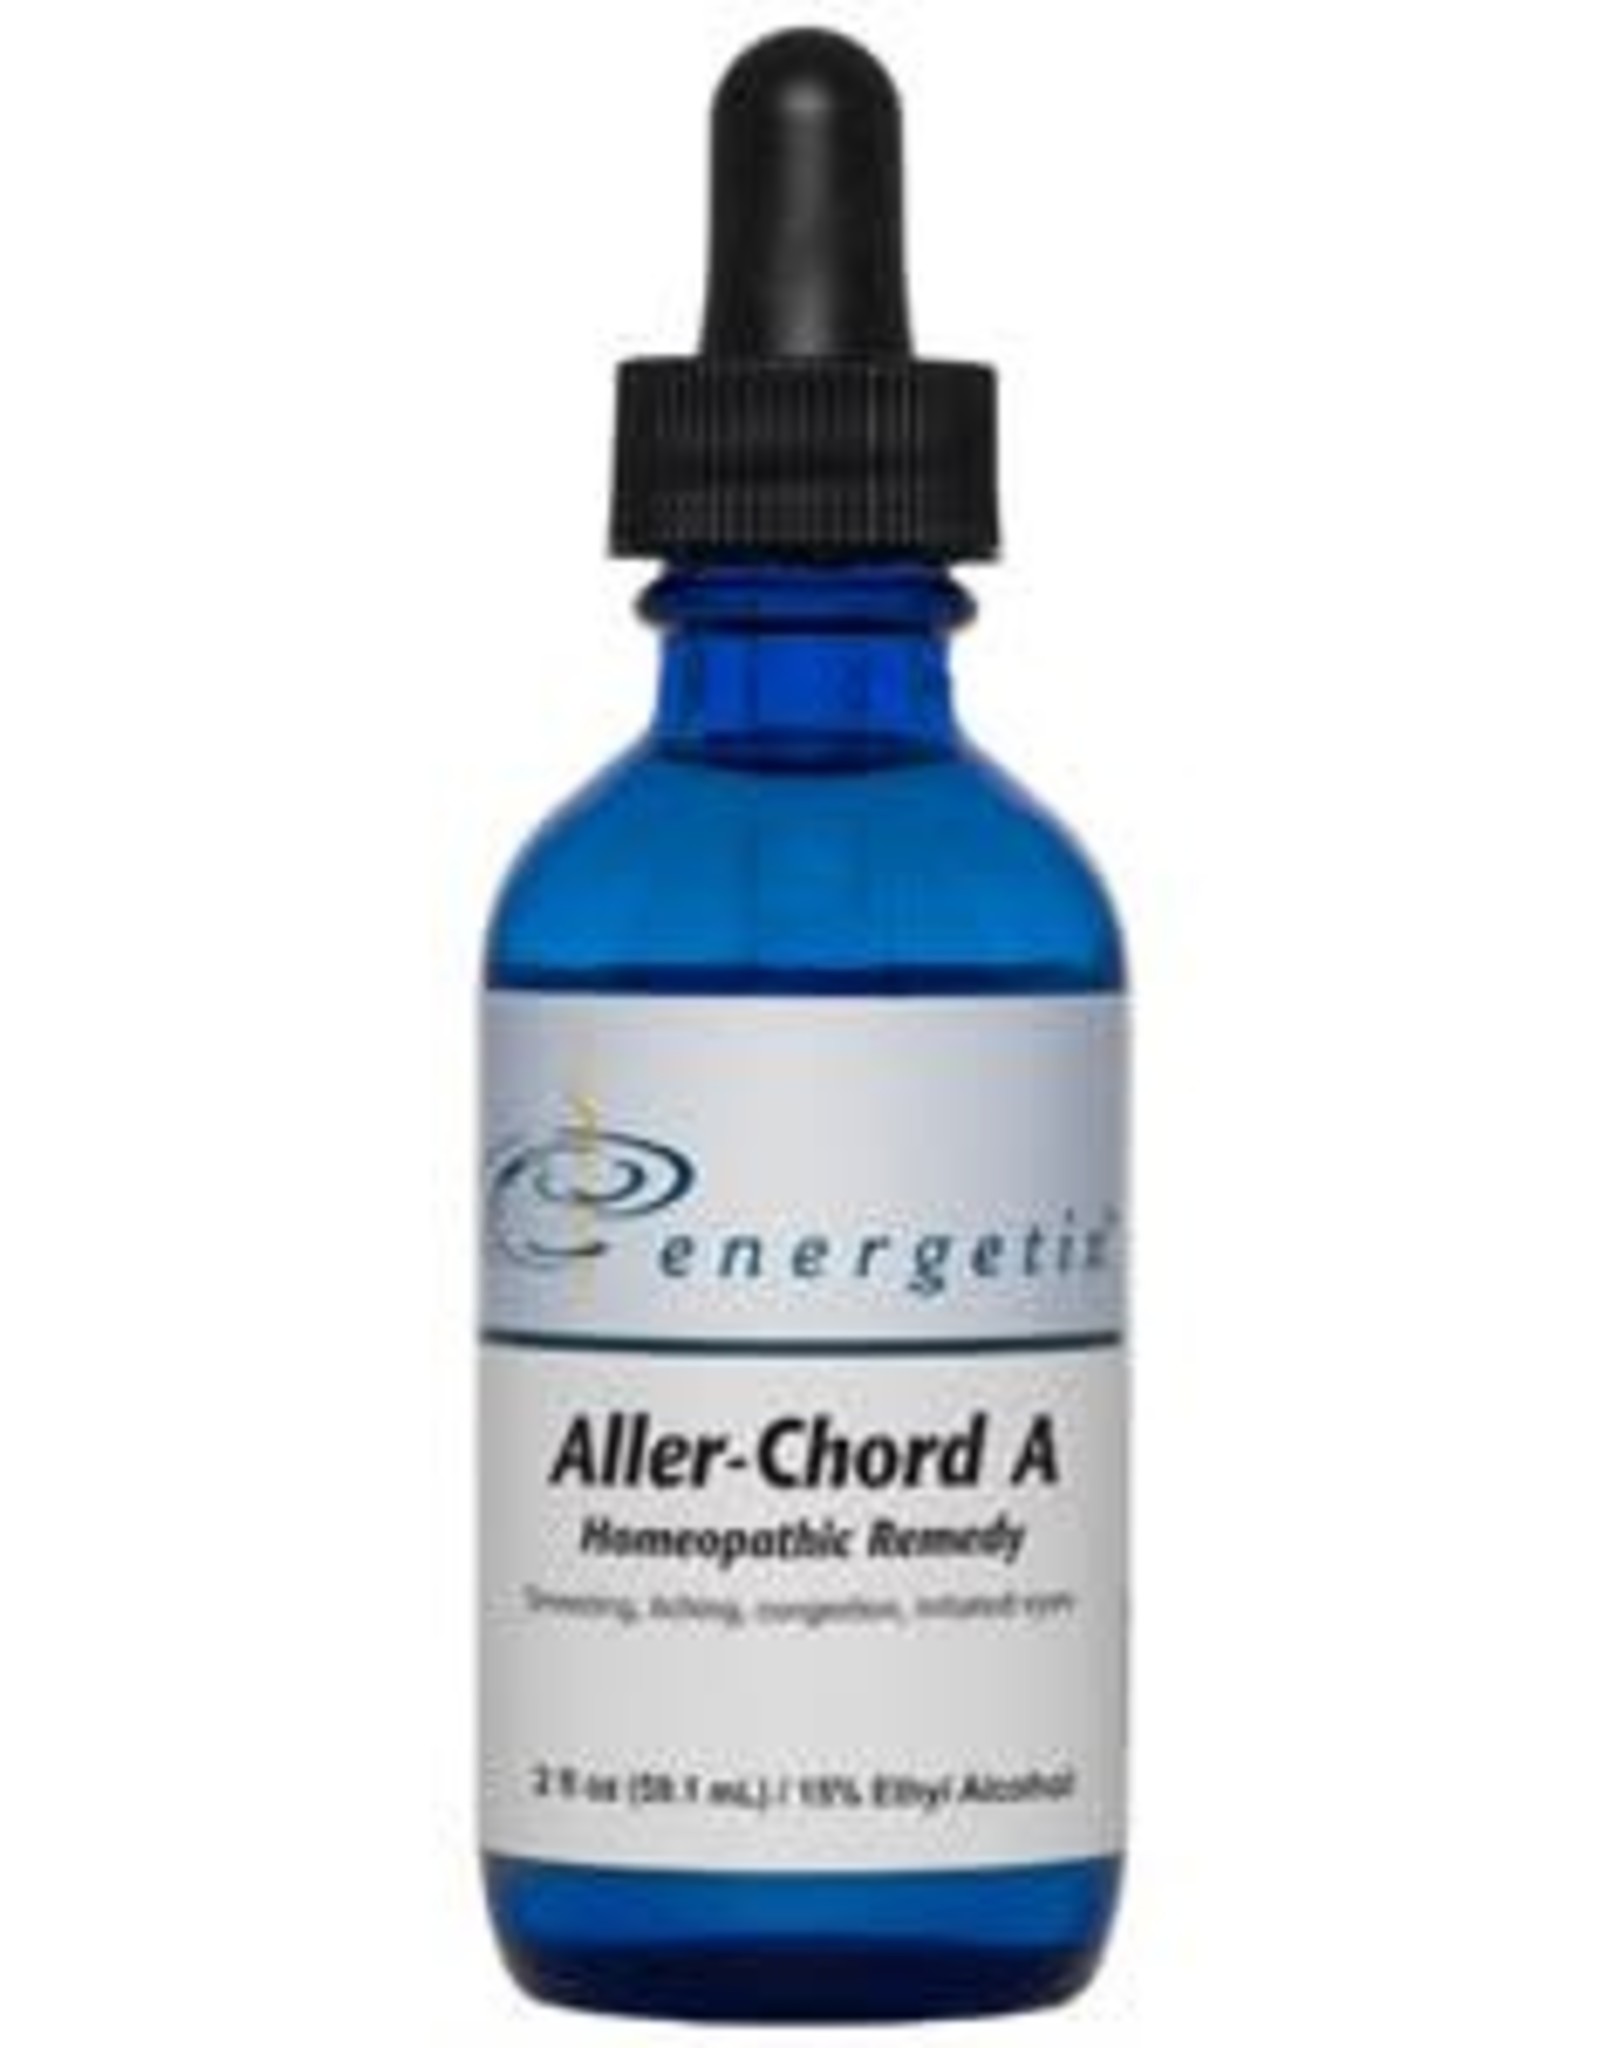 Energetix Aller-Chord A